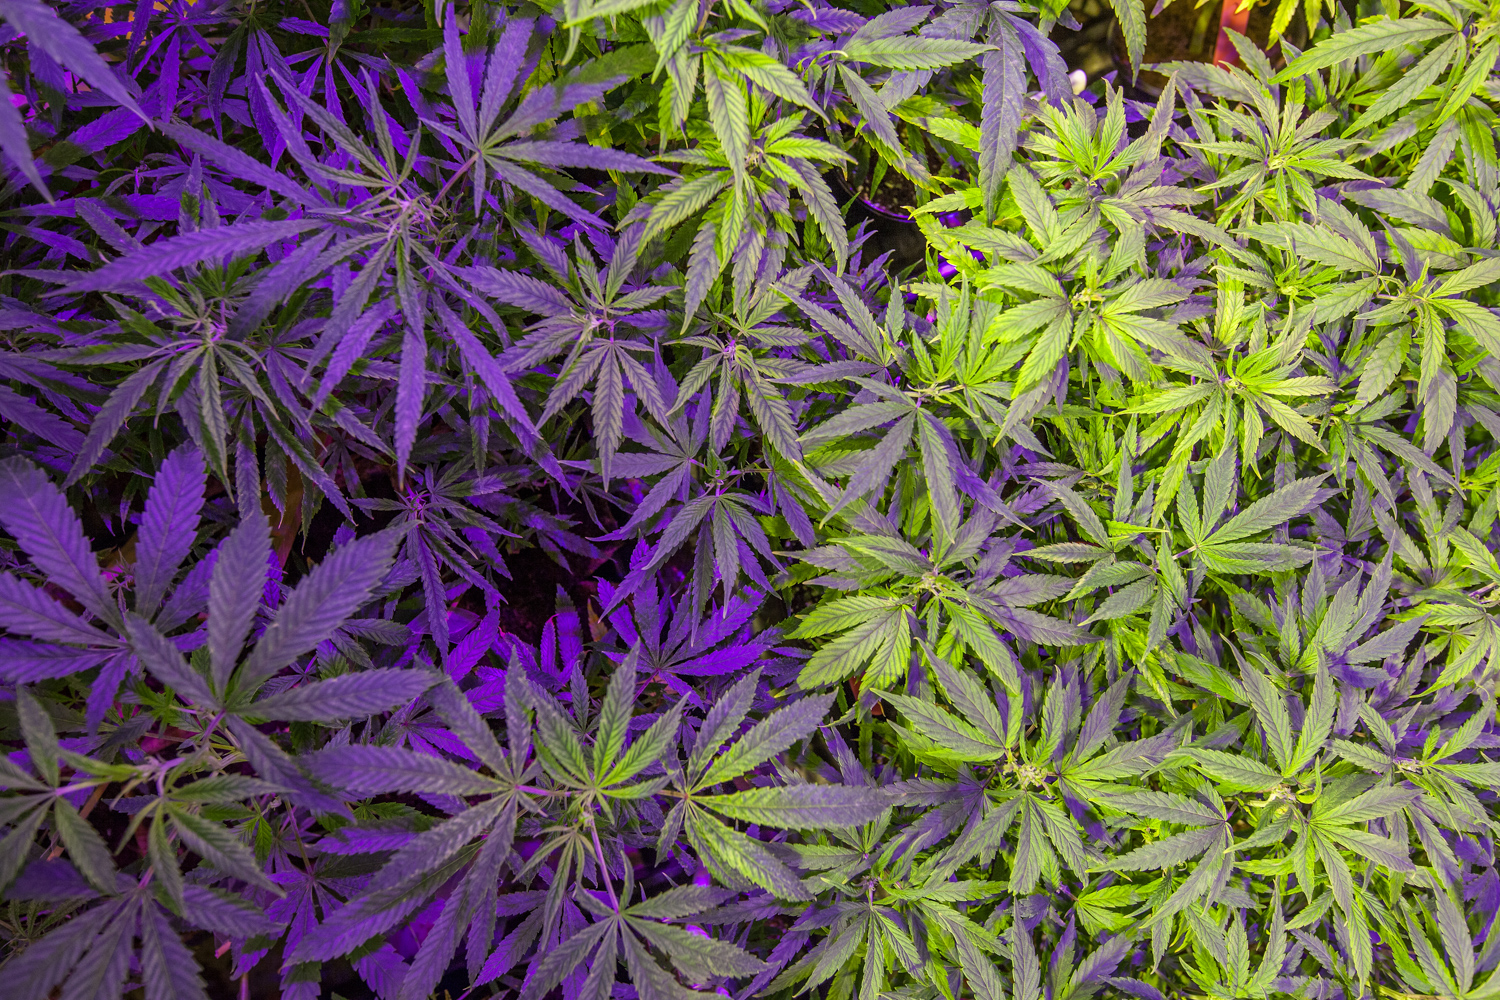 Federal: Continue To Protect Lawful Medical Marijuana Programs